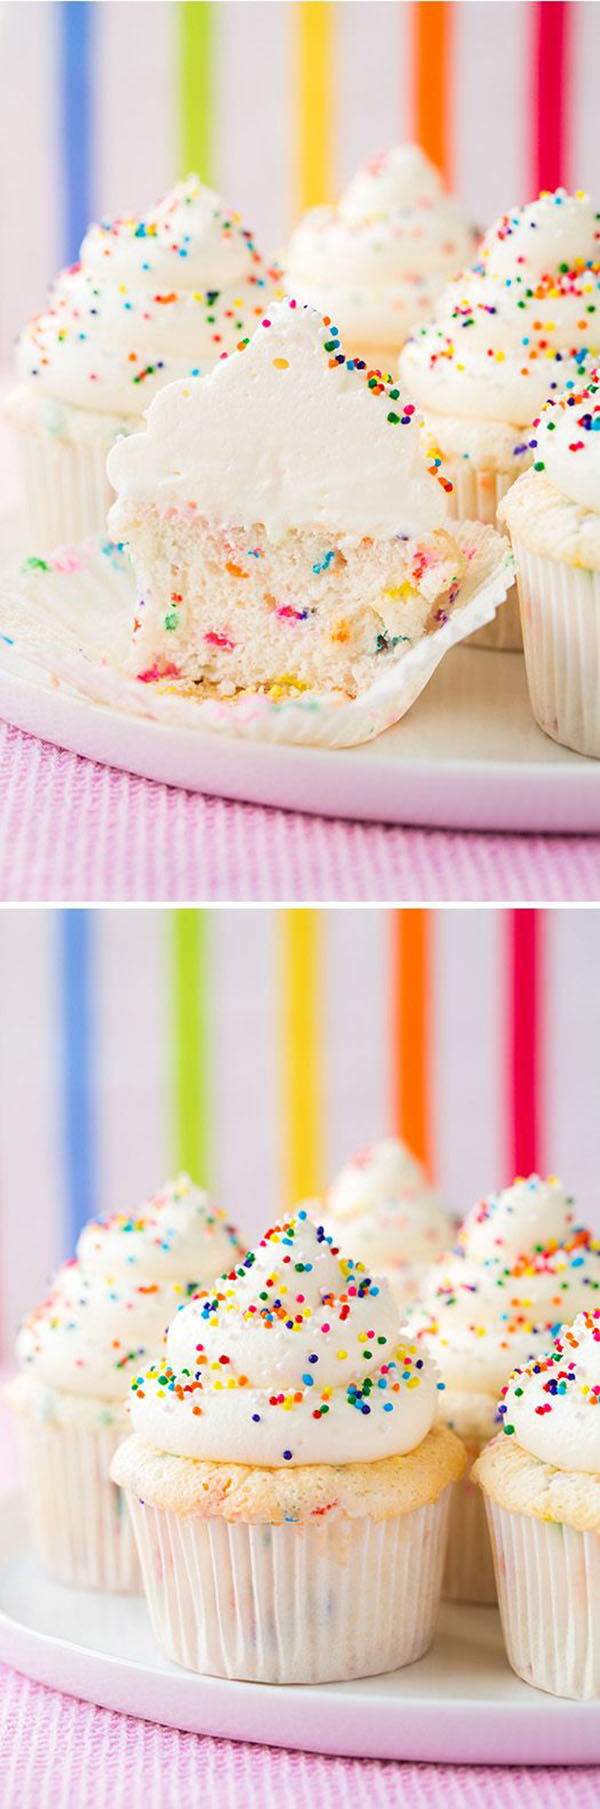 Rainbow Sprinkle Cupcakes- Fun! See More Ideas for Rainbow Sprinkle Treats On B. Lovely Events